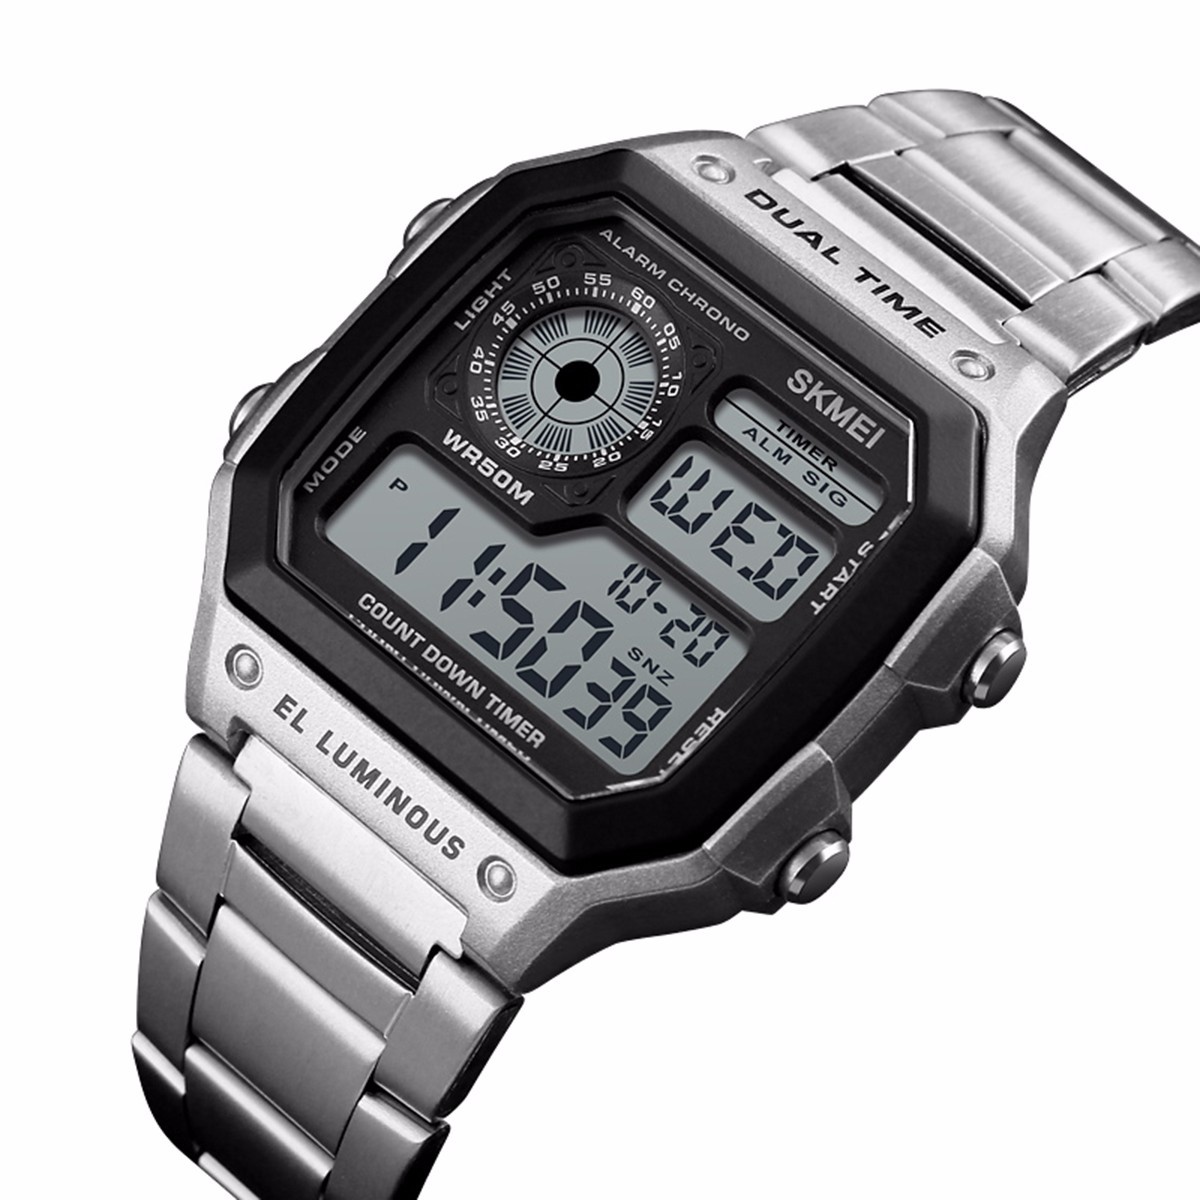 [BIG SALE] SKMEI 1335 Men Sports Watches Waterproof Mens Watches Top Brand Luxury Male Electronic Digital Watch Men Clock